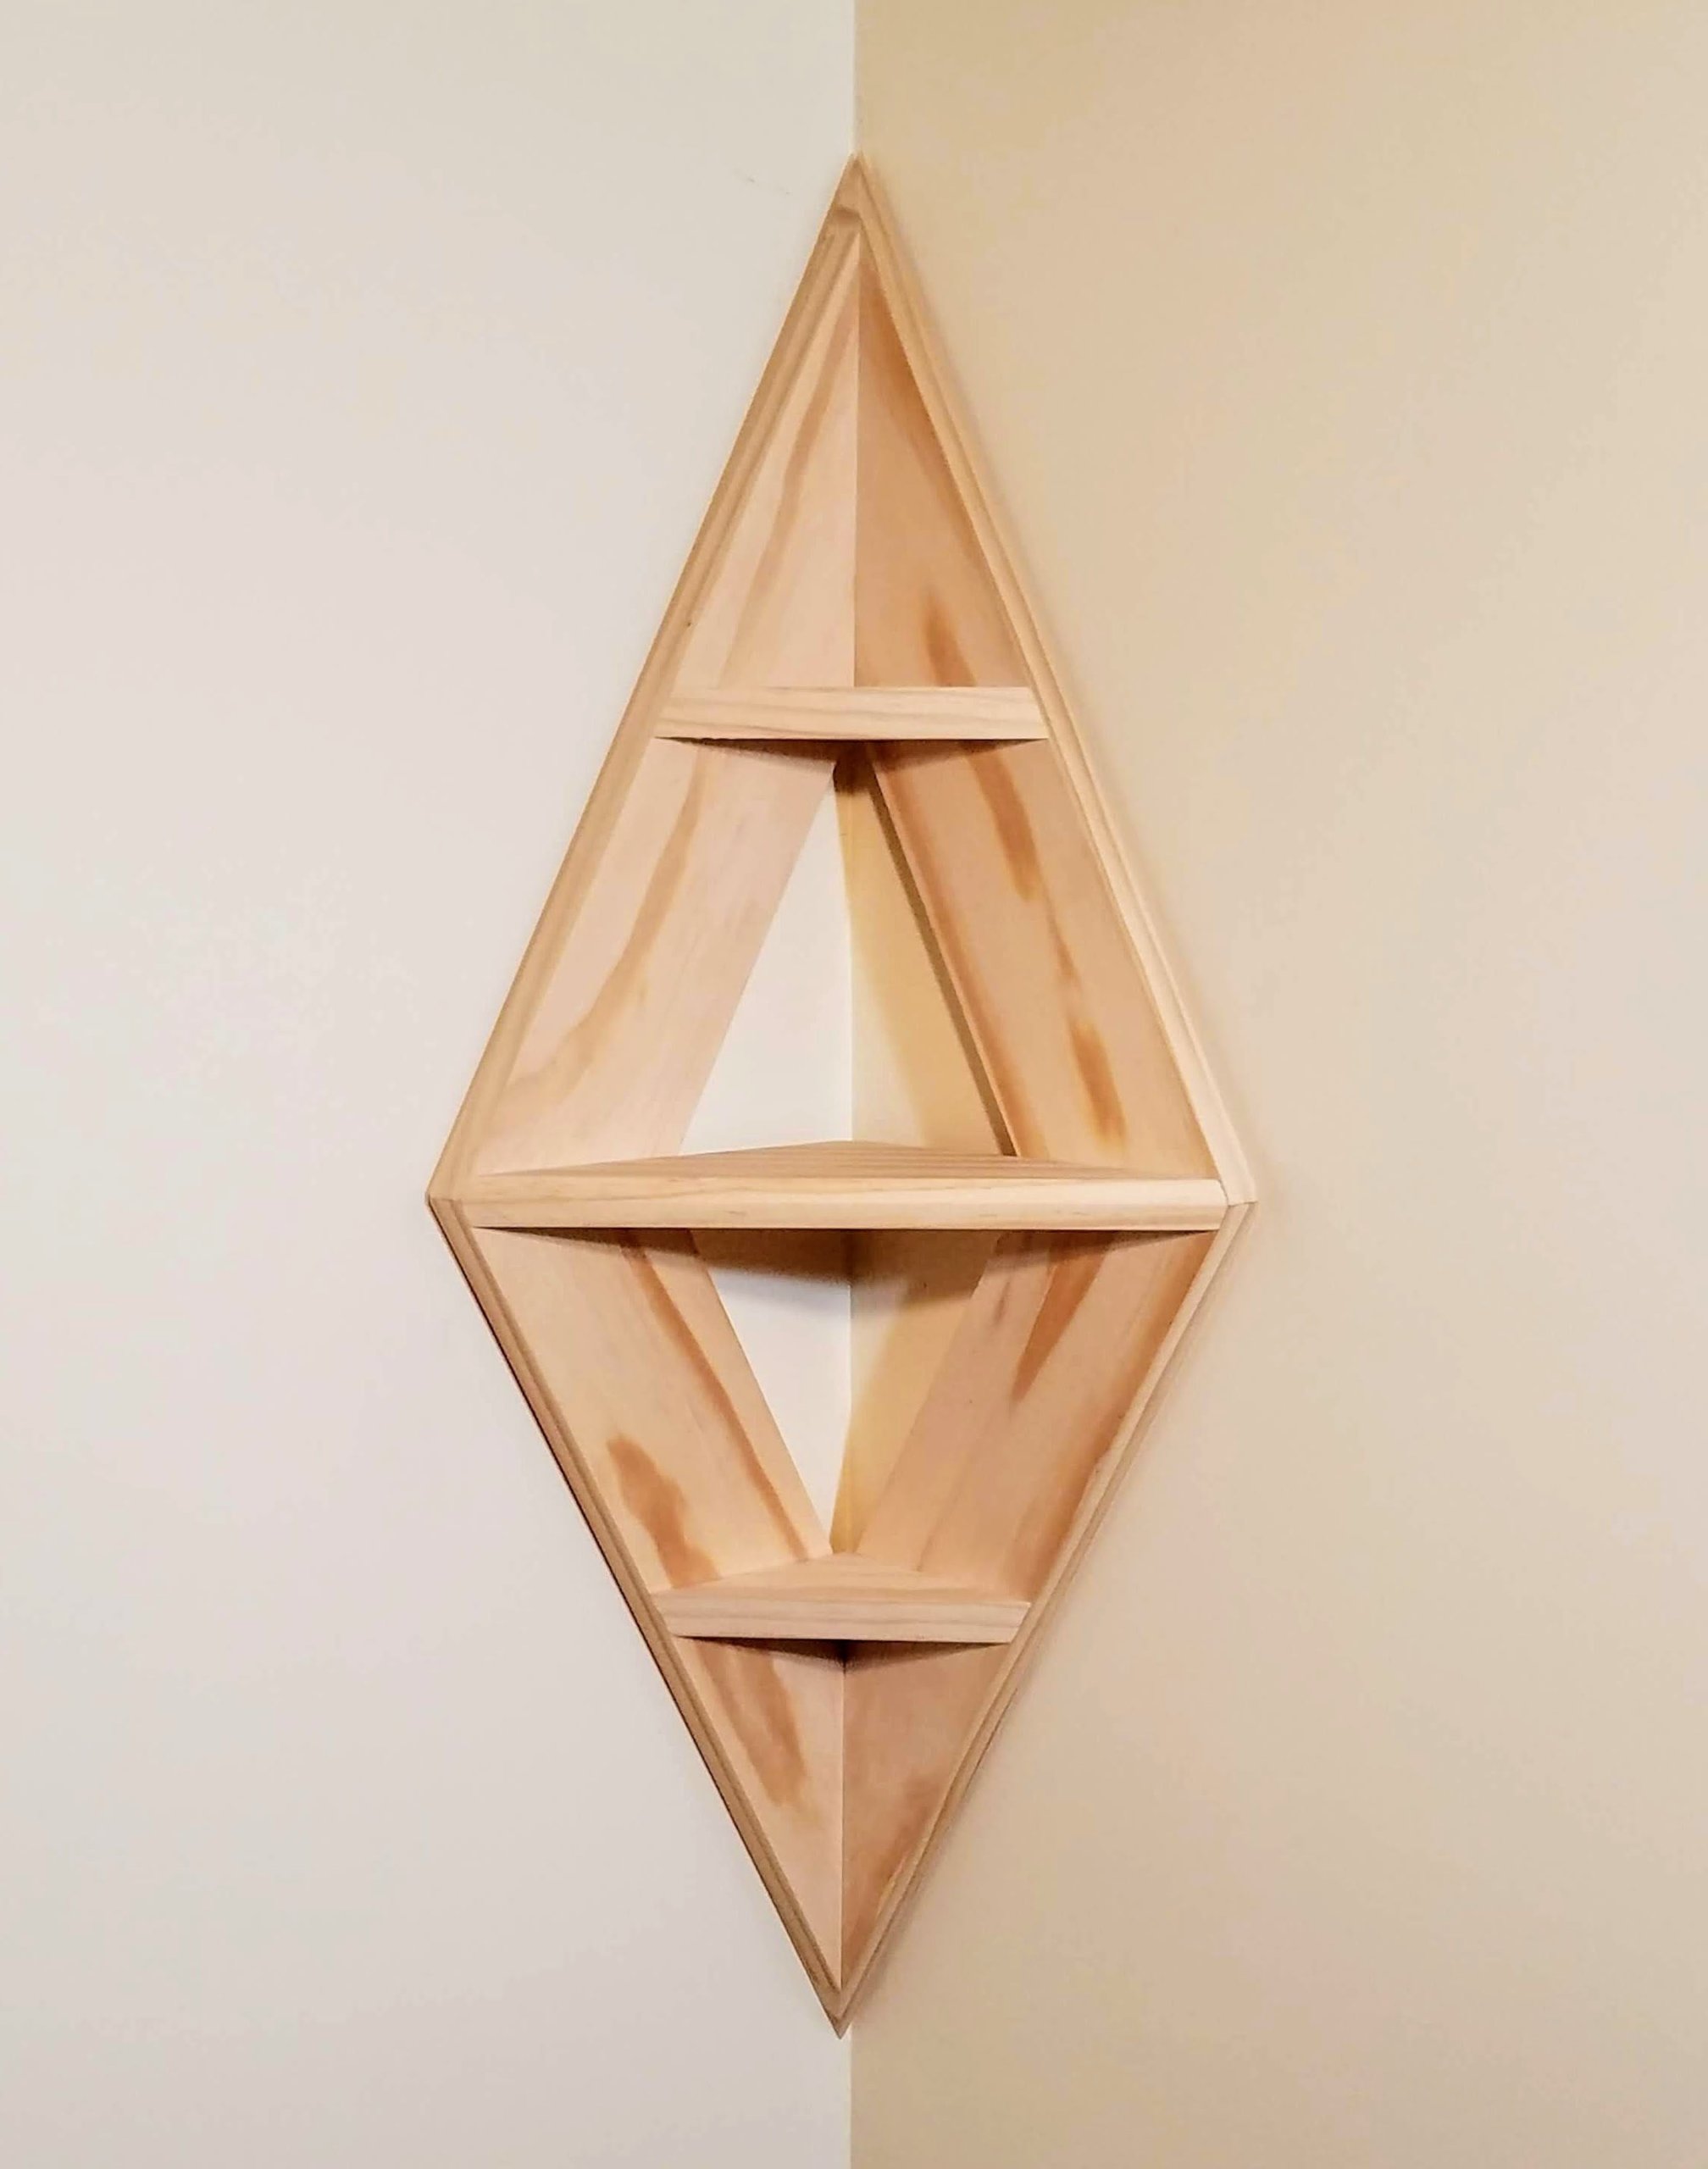 Diamon-shaped-corner-shelving-in-wood-81937-scaled